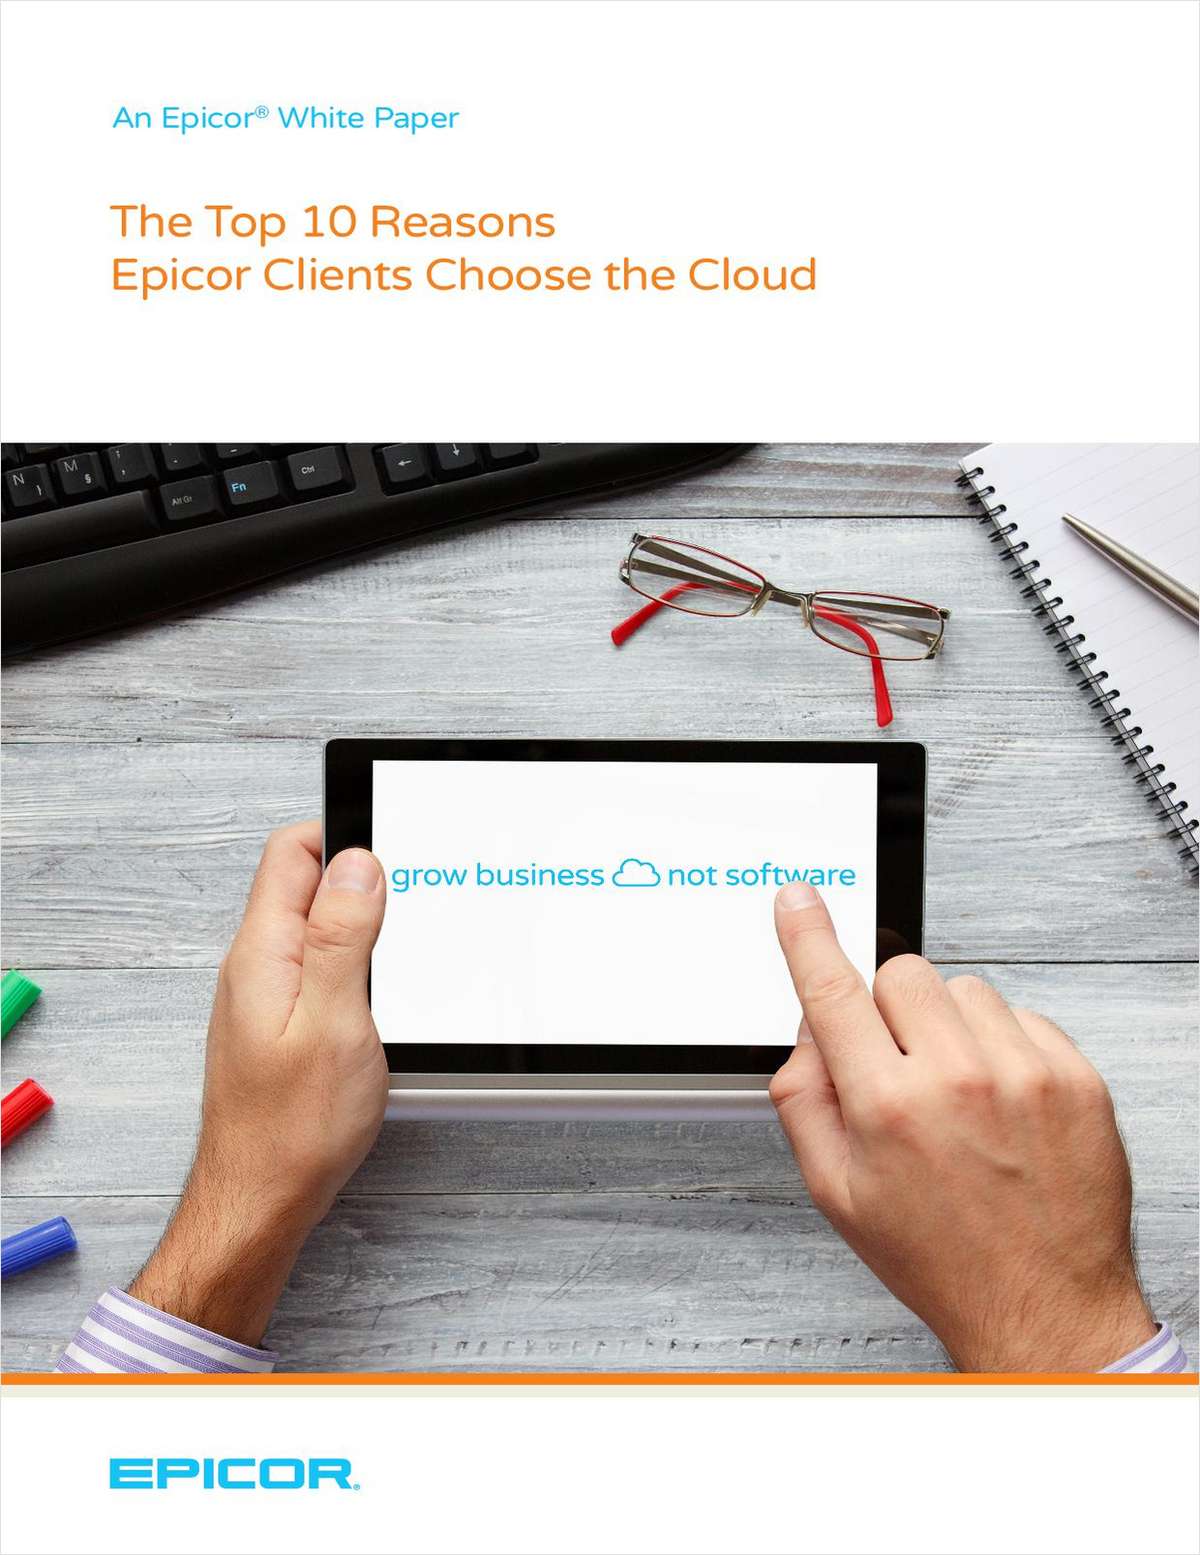 The Top 10 Reasons Epicor Clients Choose the Cloud